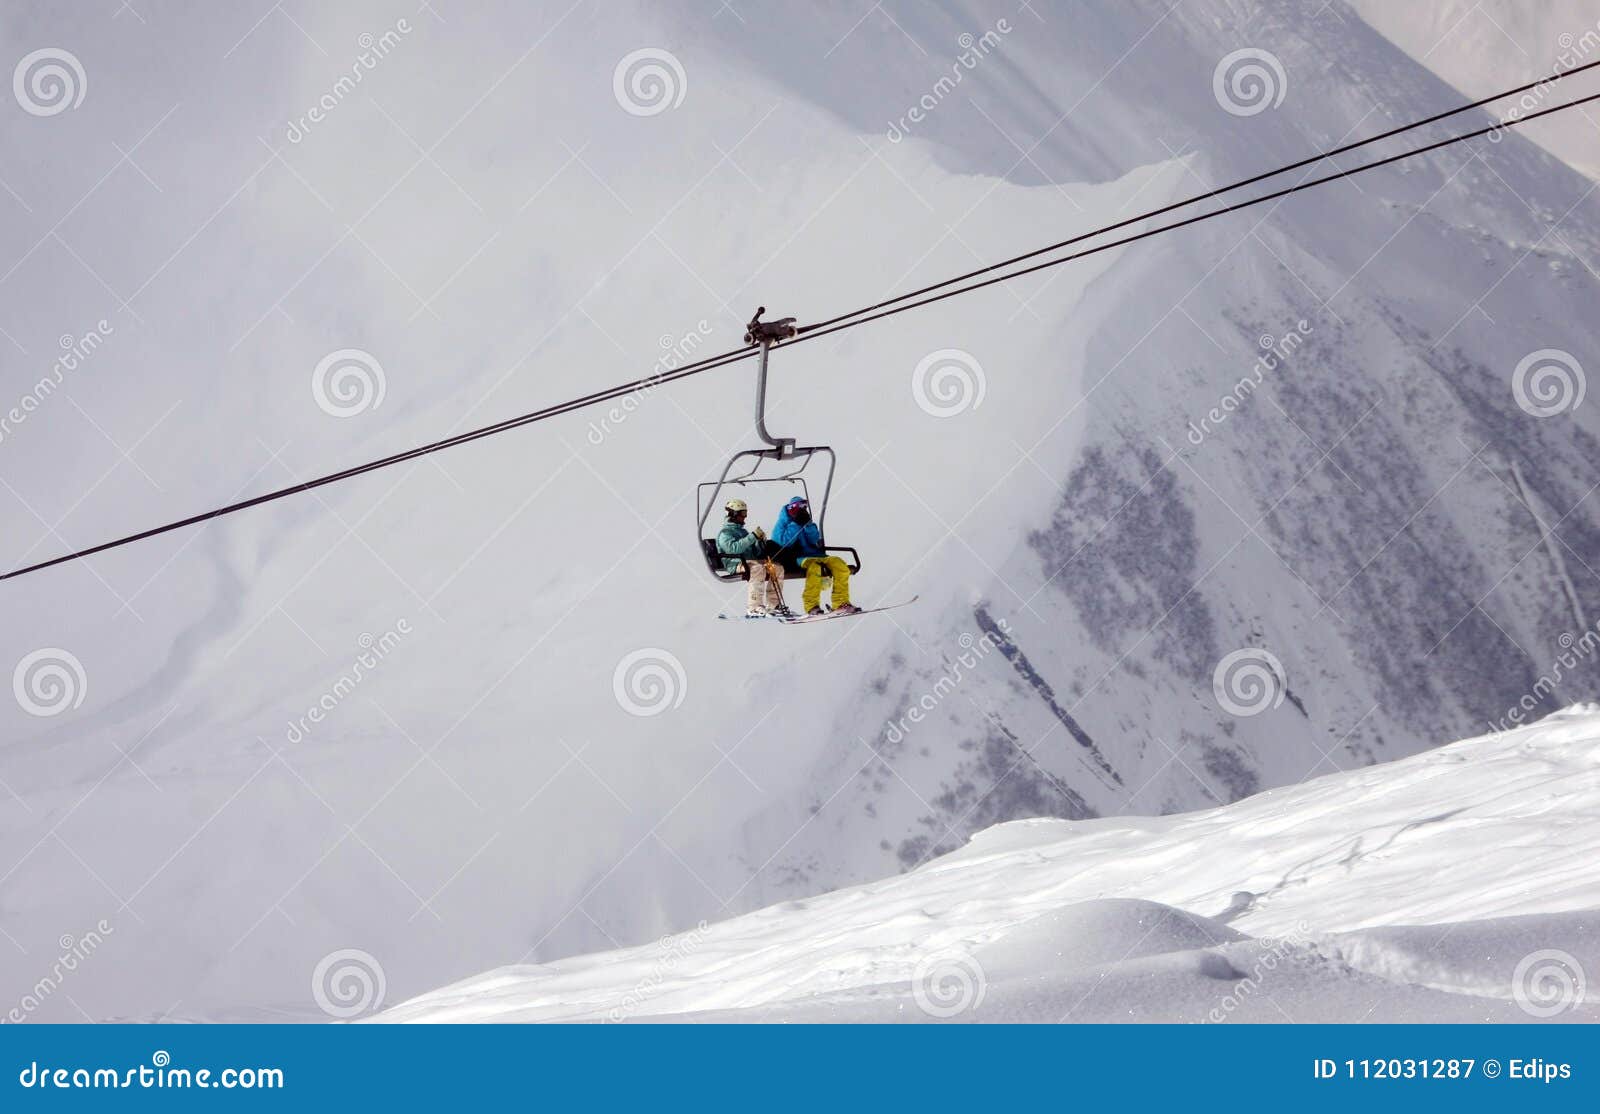 skiing resort gudauri in georgia, caucasus montains